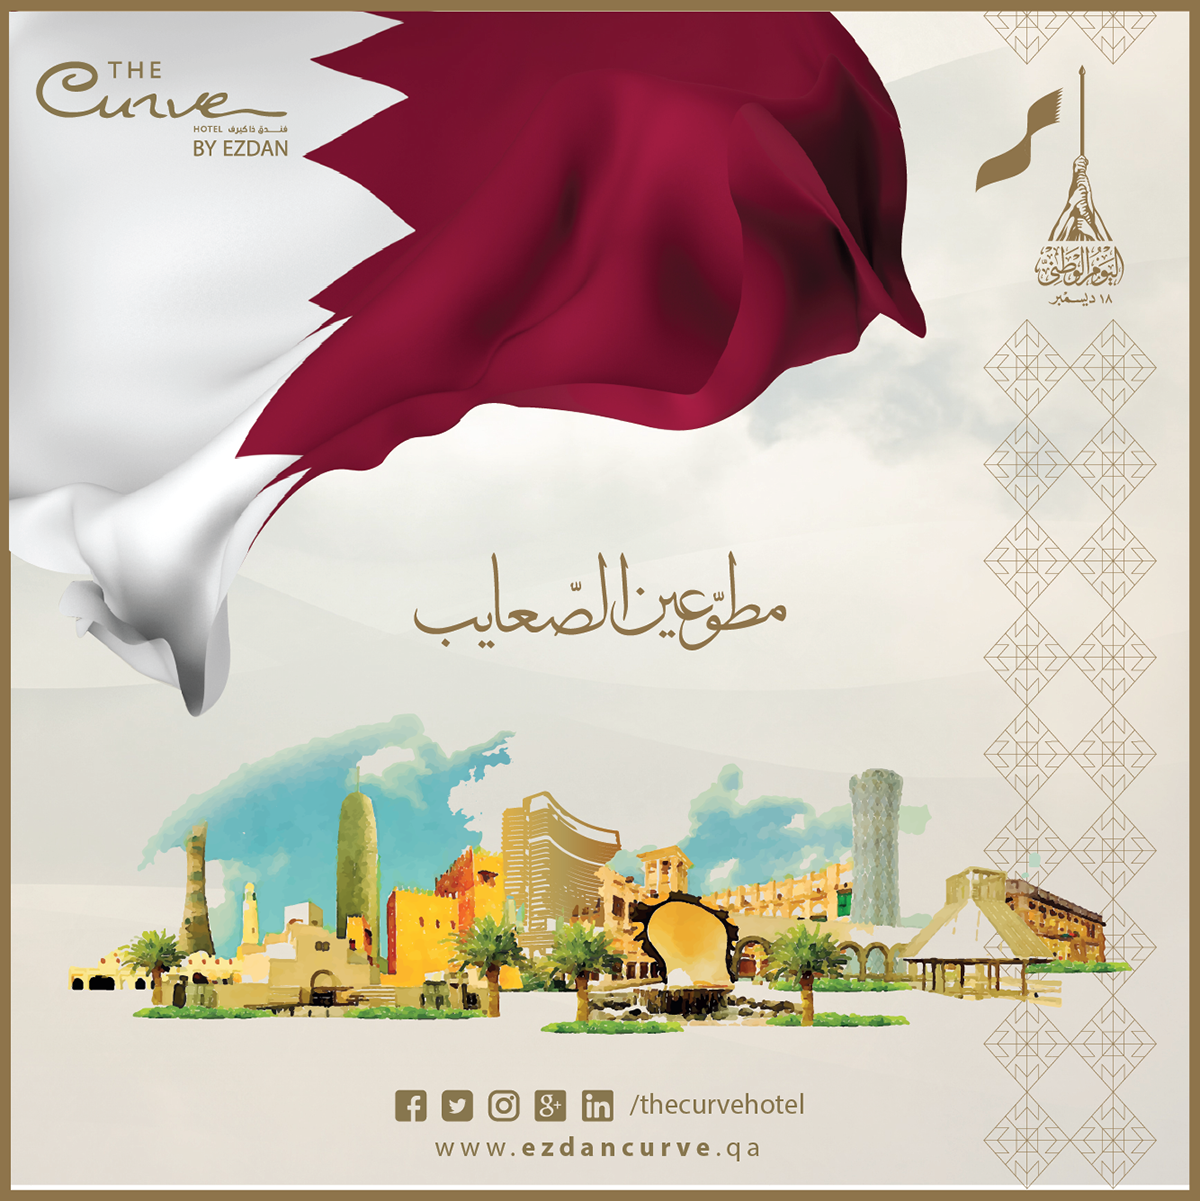 Qatar National day flag the Curve Hotel Ezdan